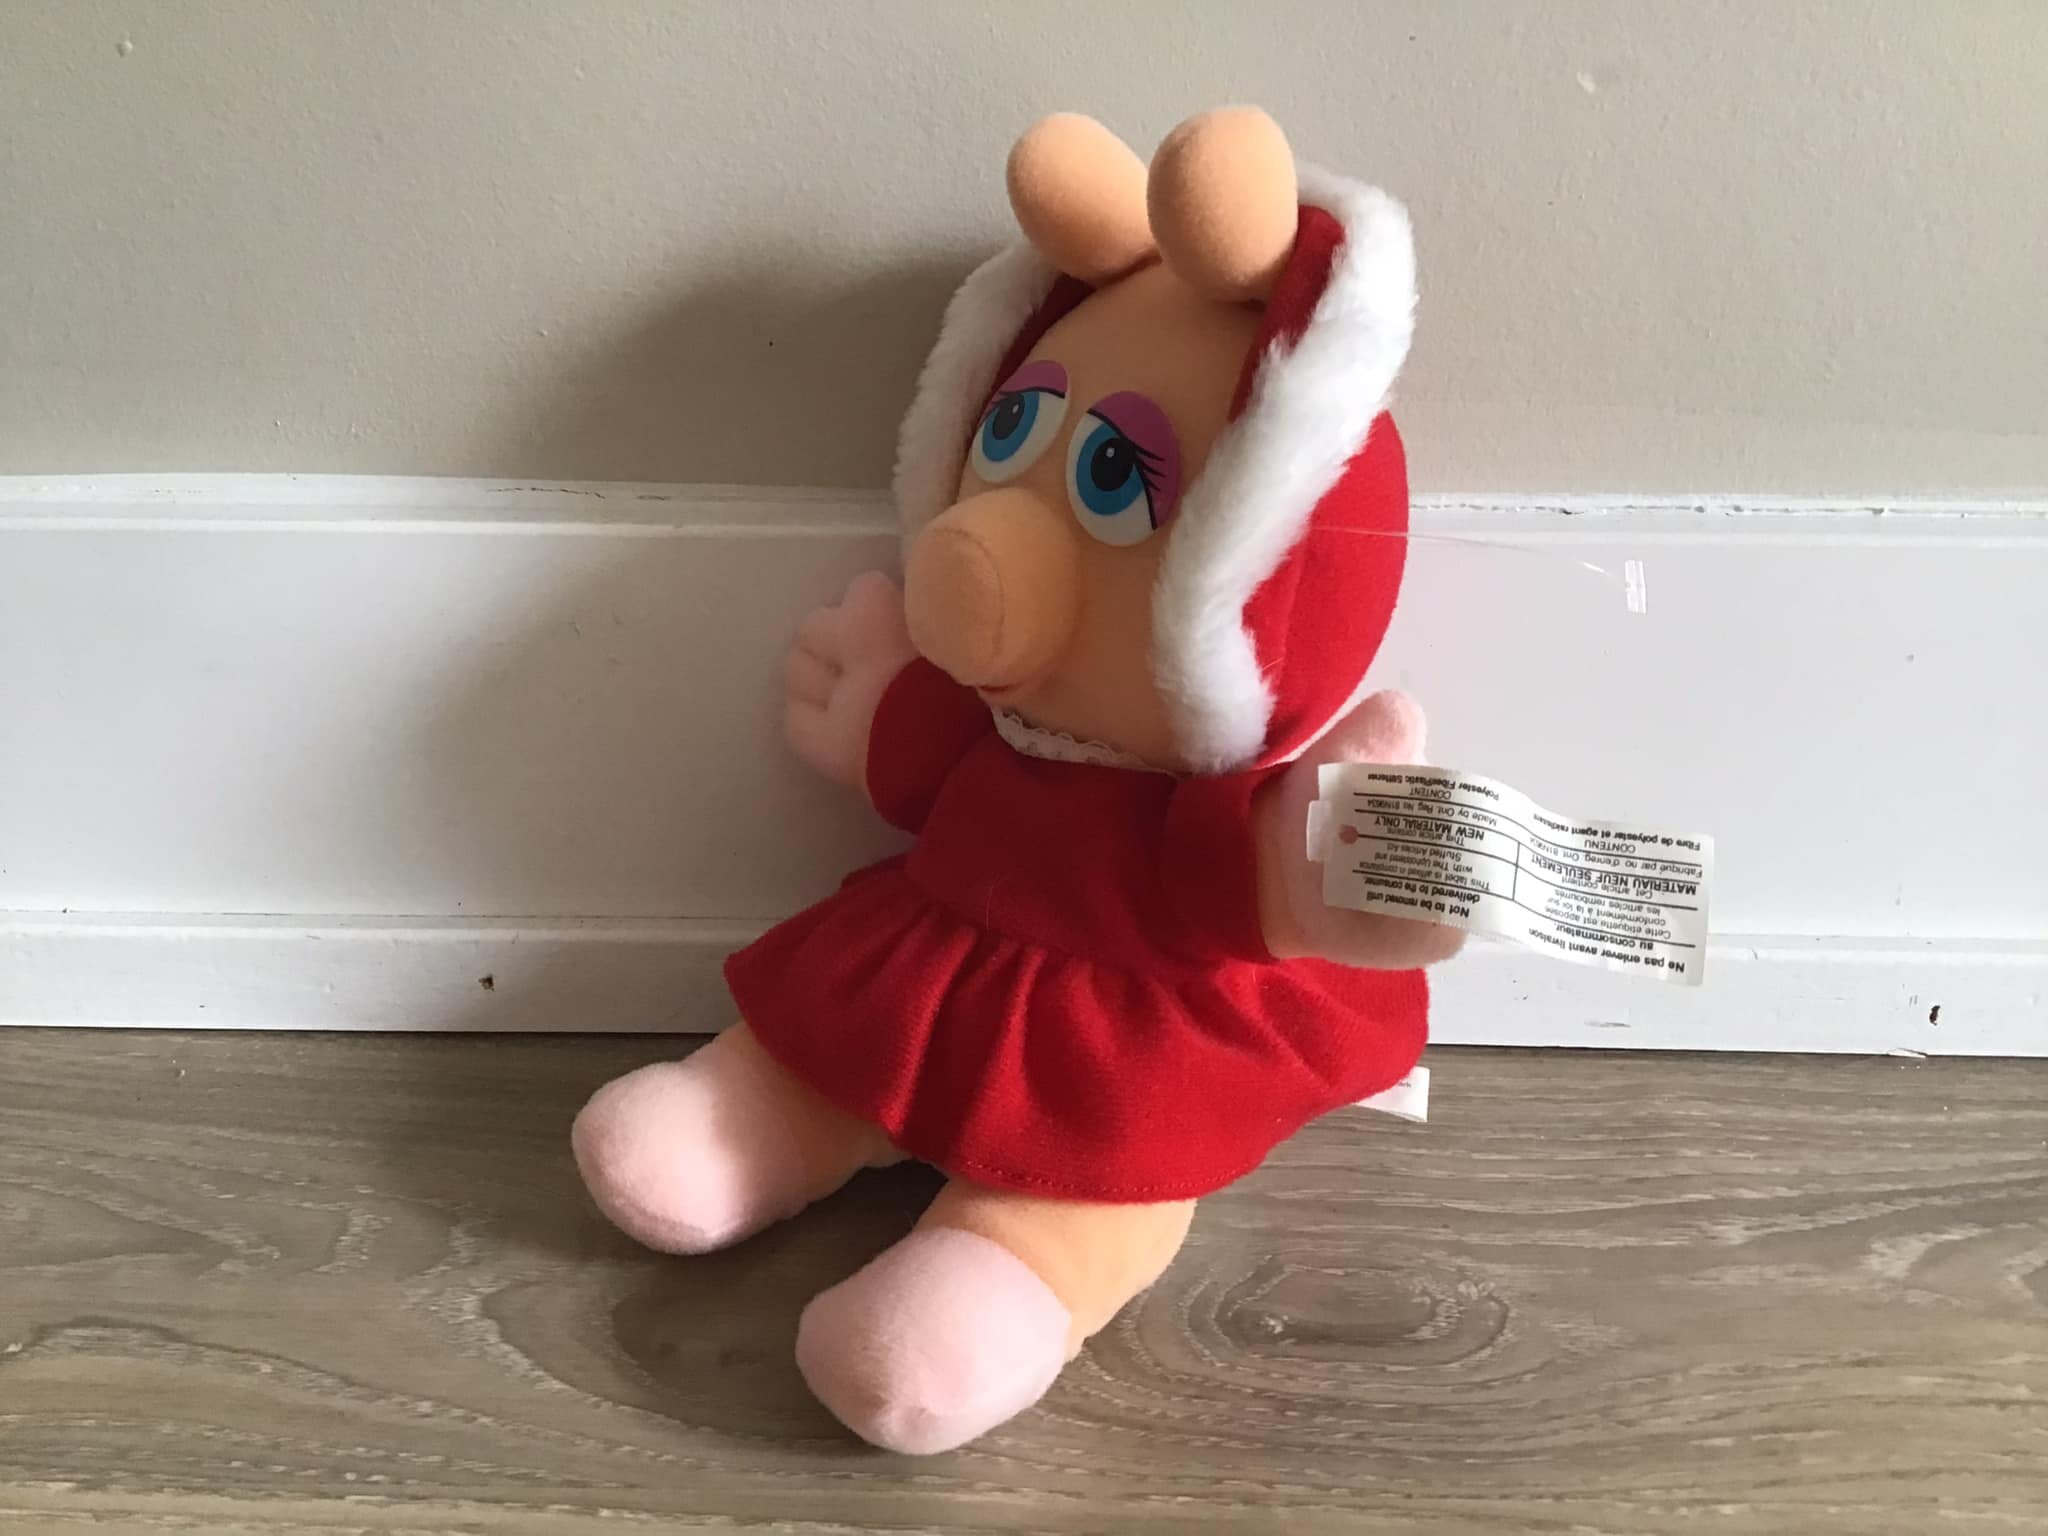 Miss Piggy as Mrs Claus Jim Henson's Muppets Christmas Hamilton Collection  Plush